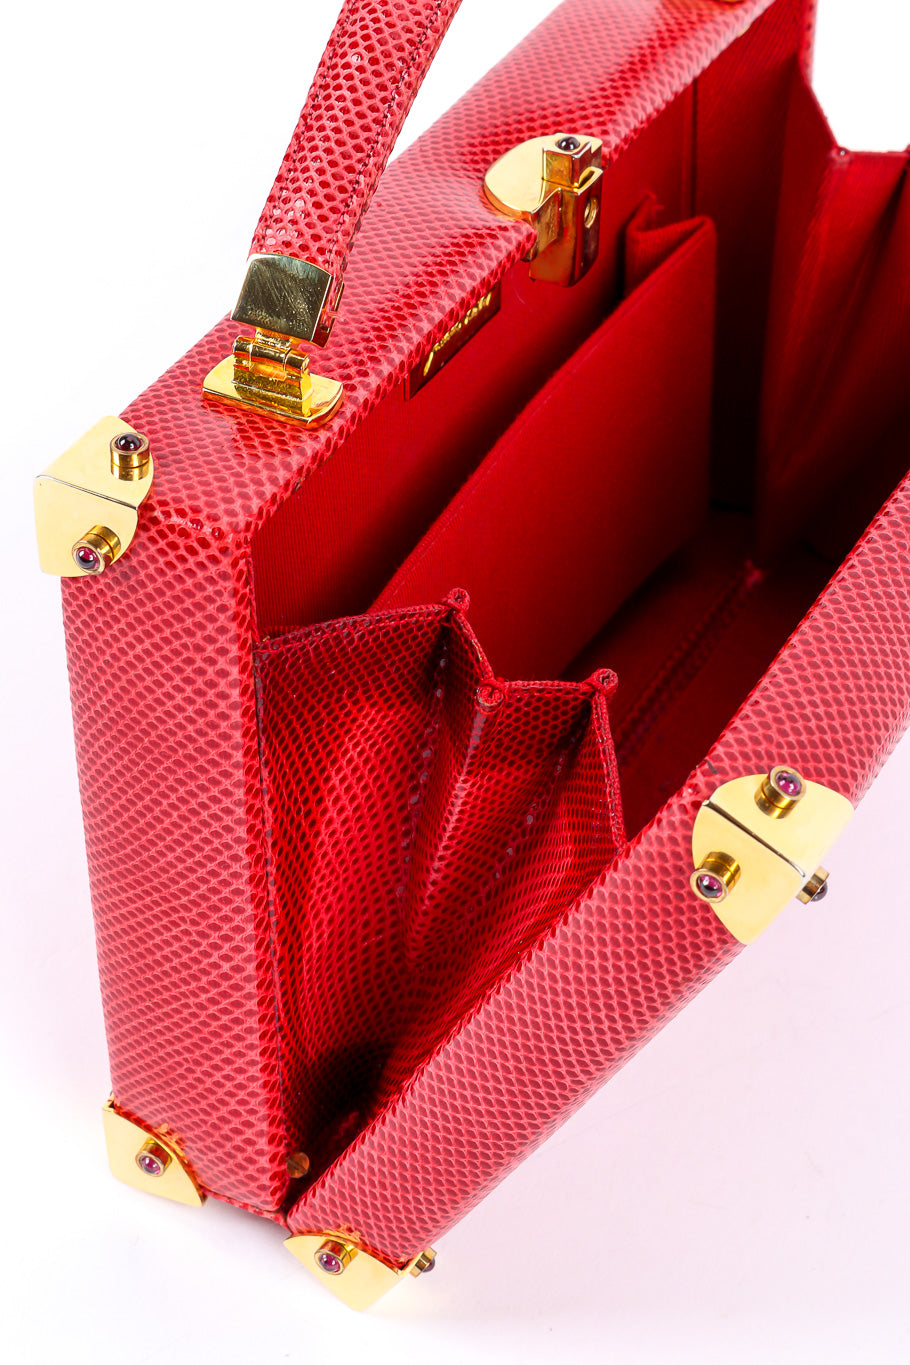 Leather handbag by Judith Leiber hanging open showing inside @recessla